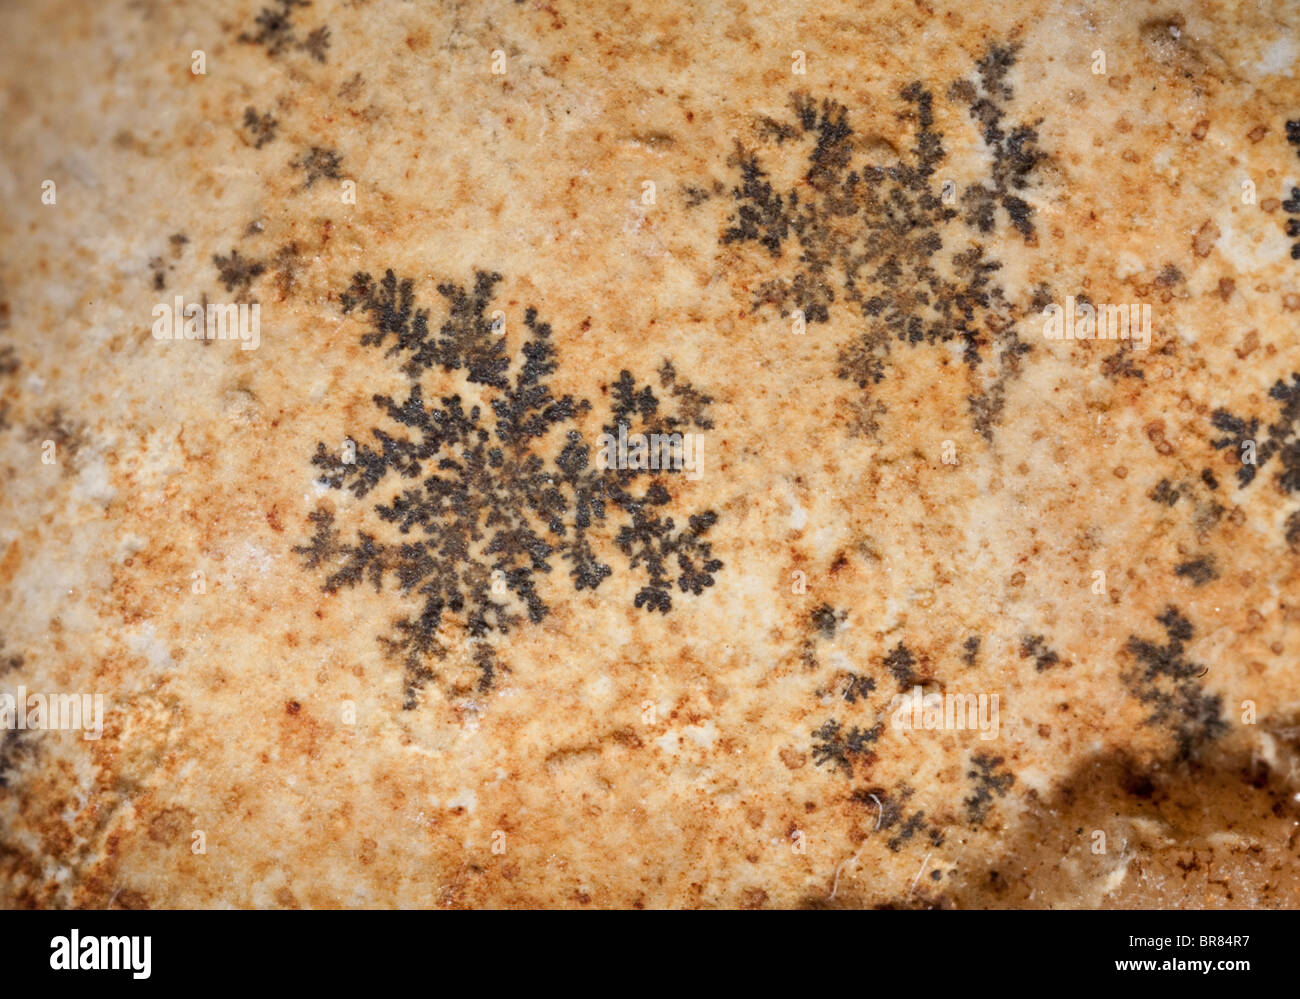 Crystal dendrites on limestone matrix Stock Photo